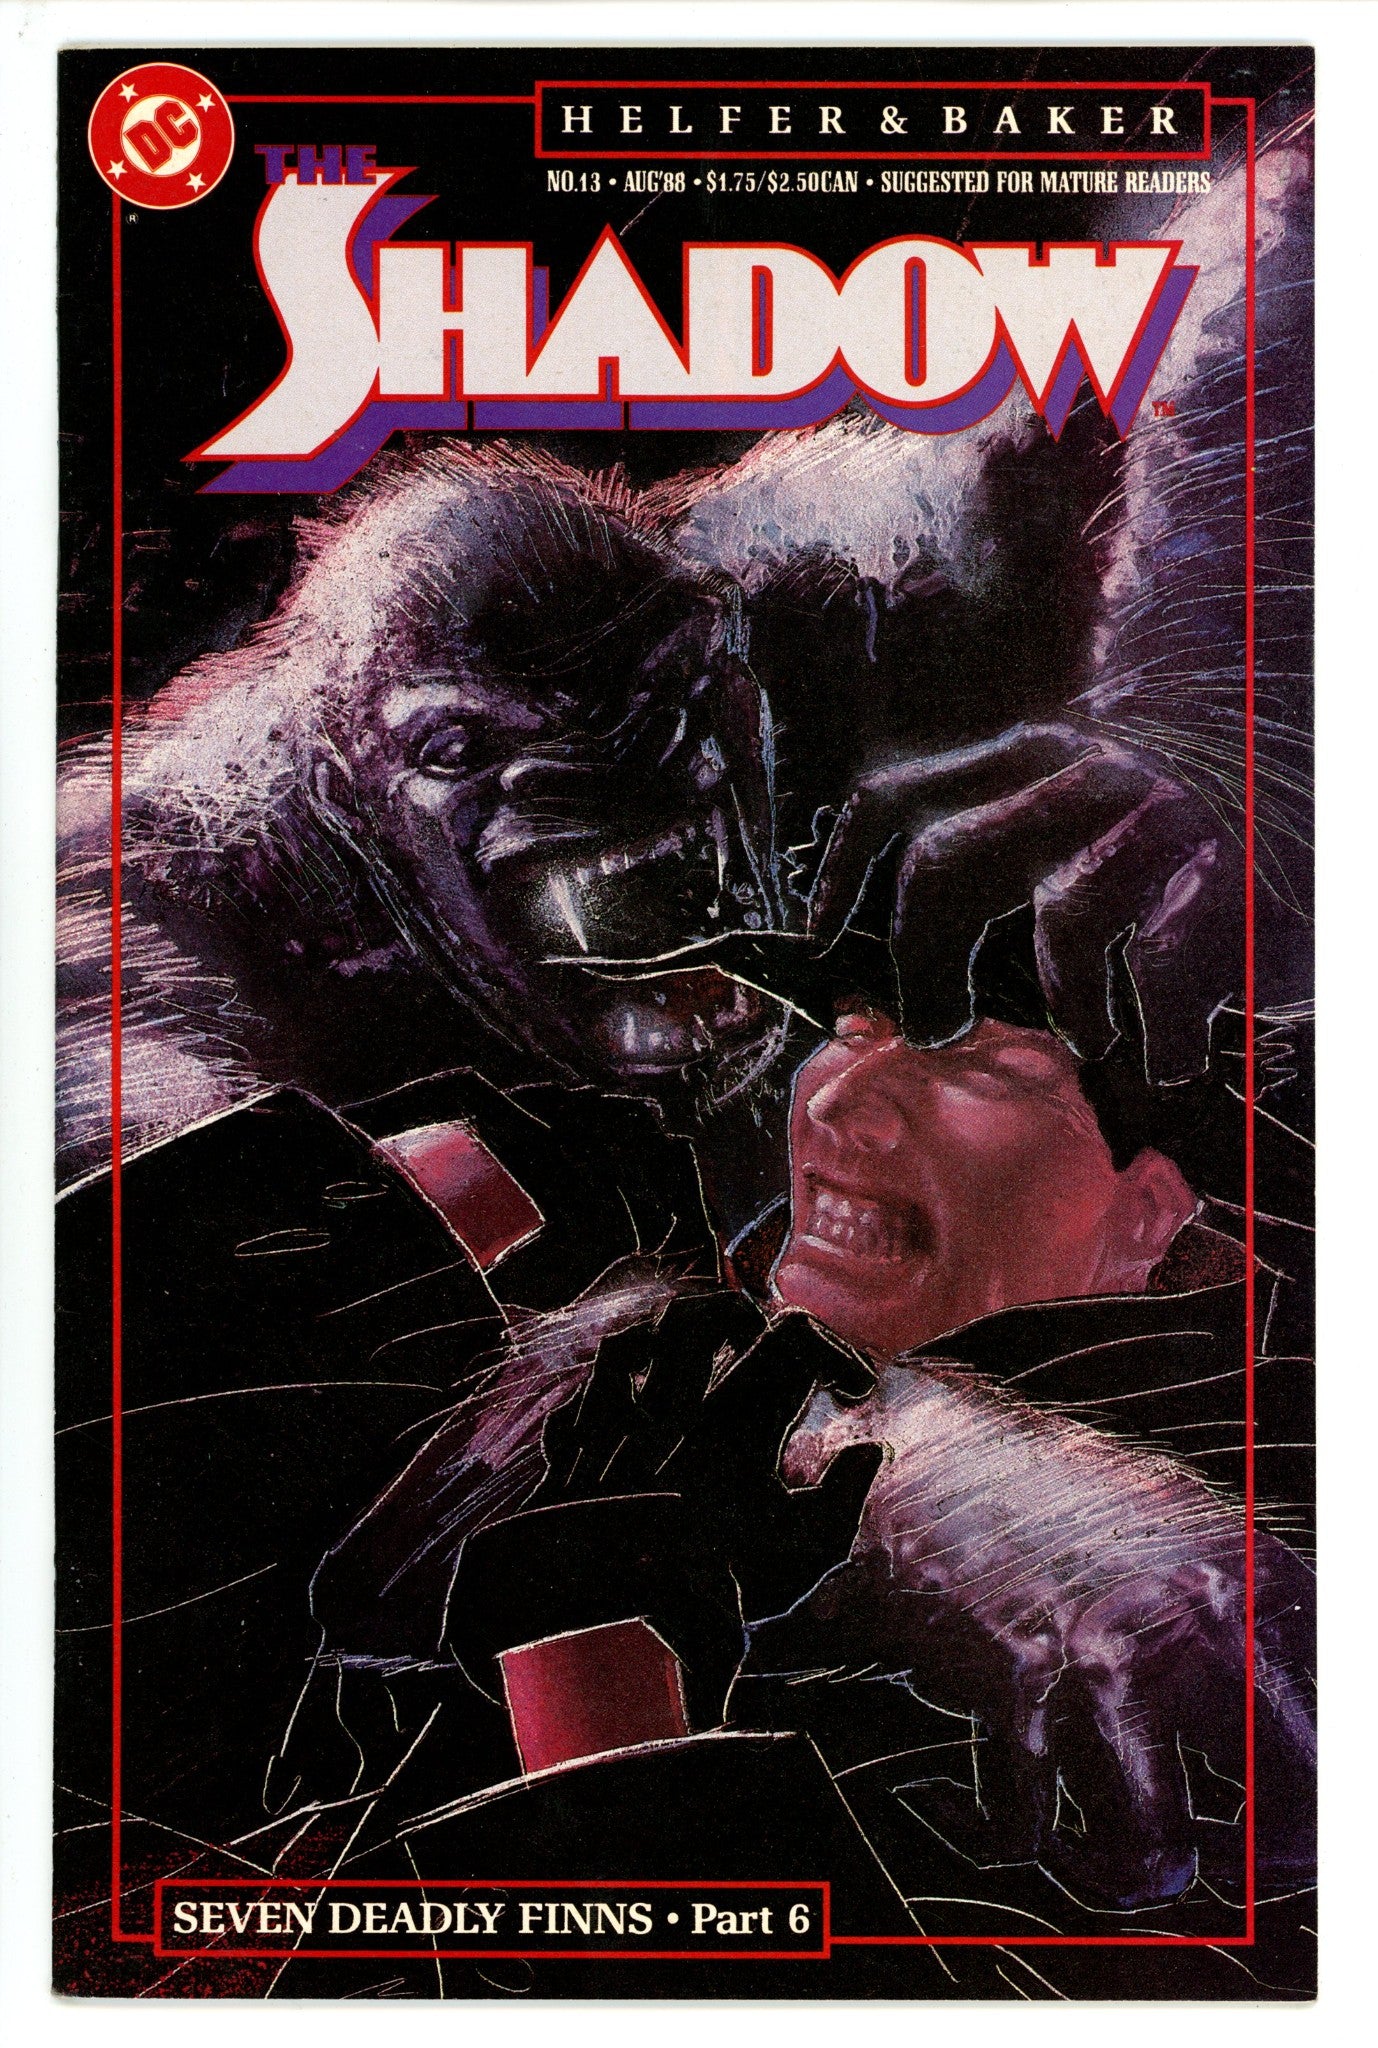 The Shadow Vol 3 13 (1988)